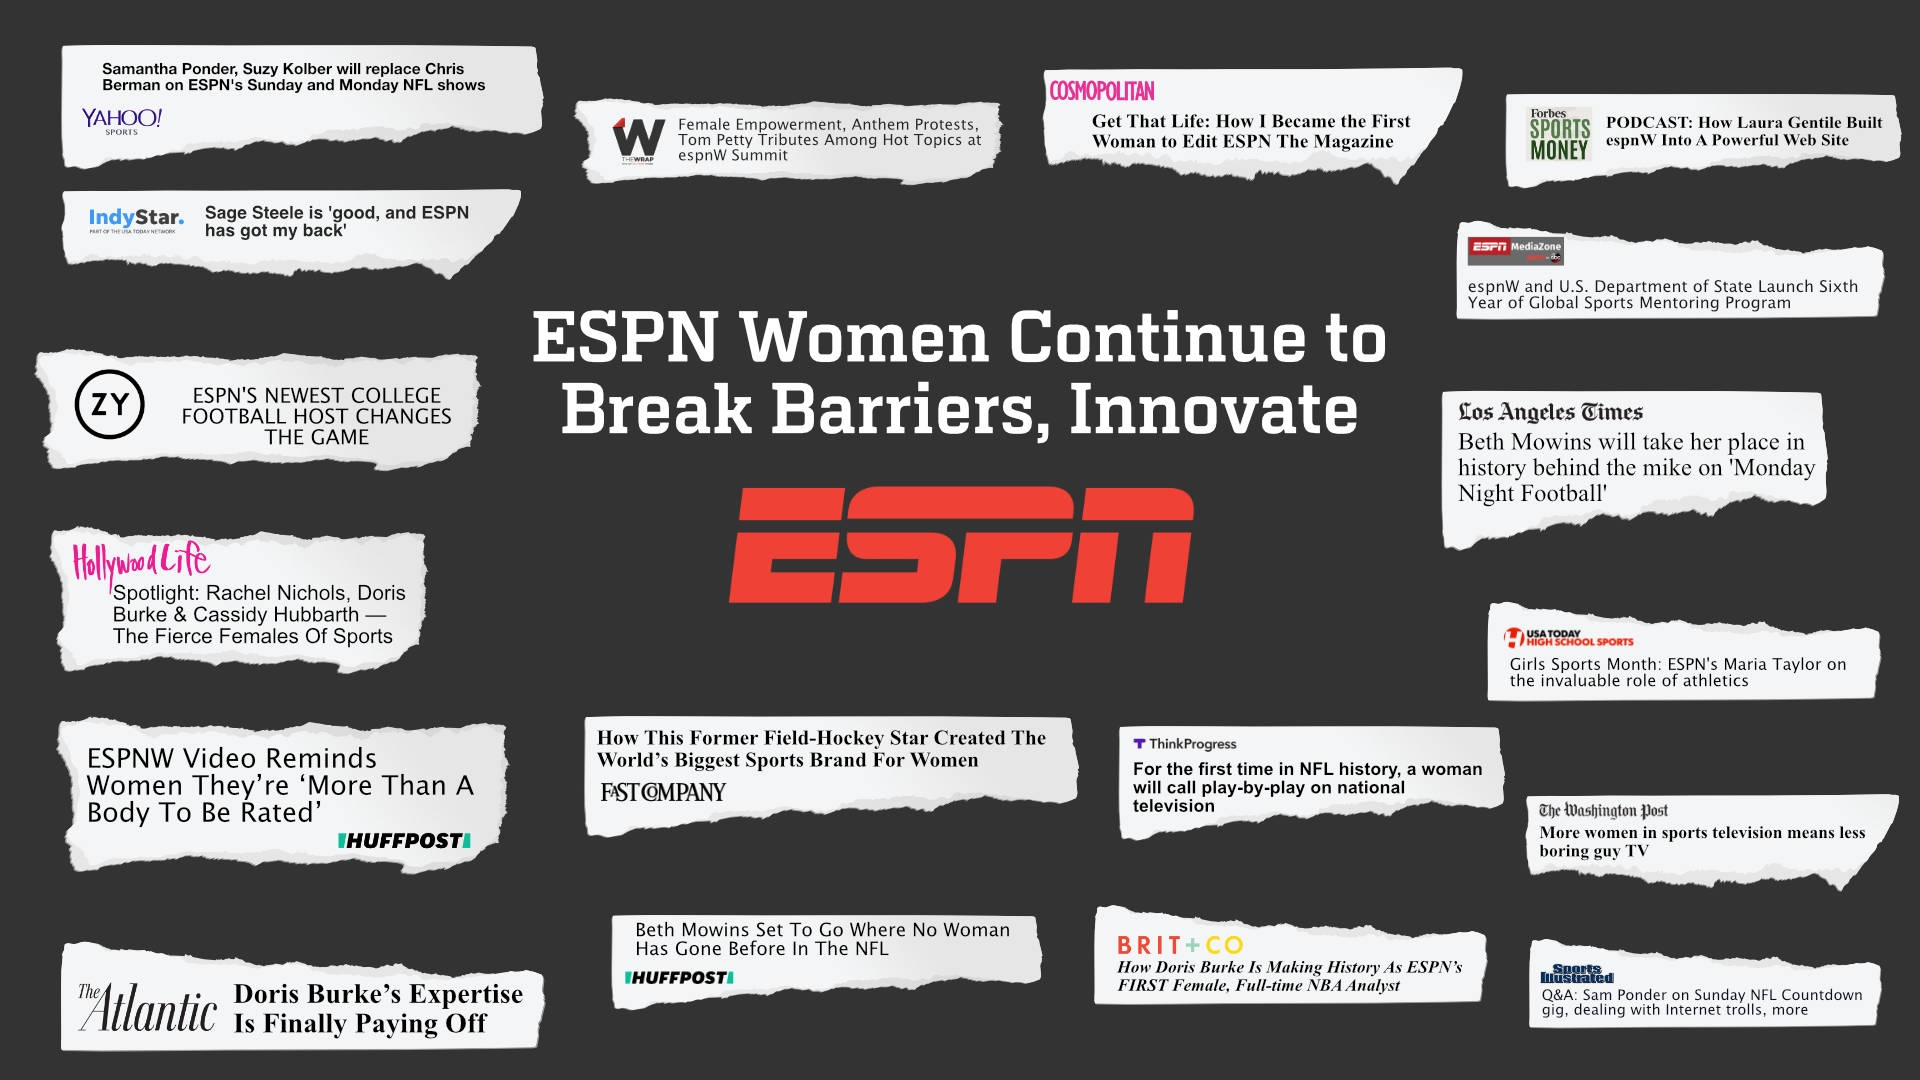 ESPN women continue to break barriers, innovate